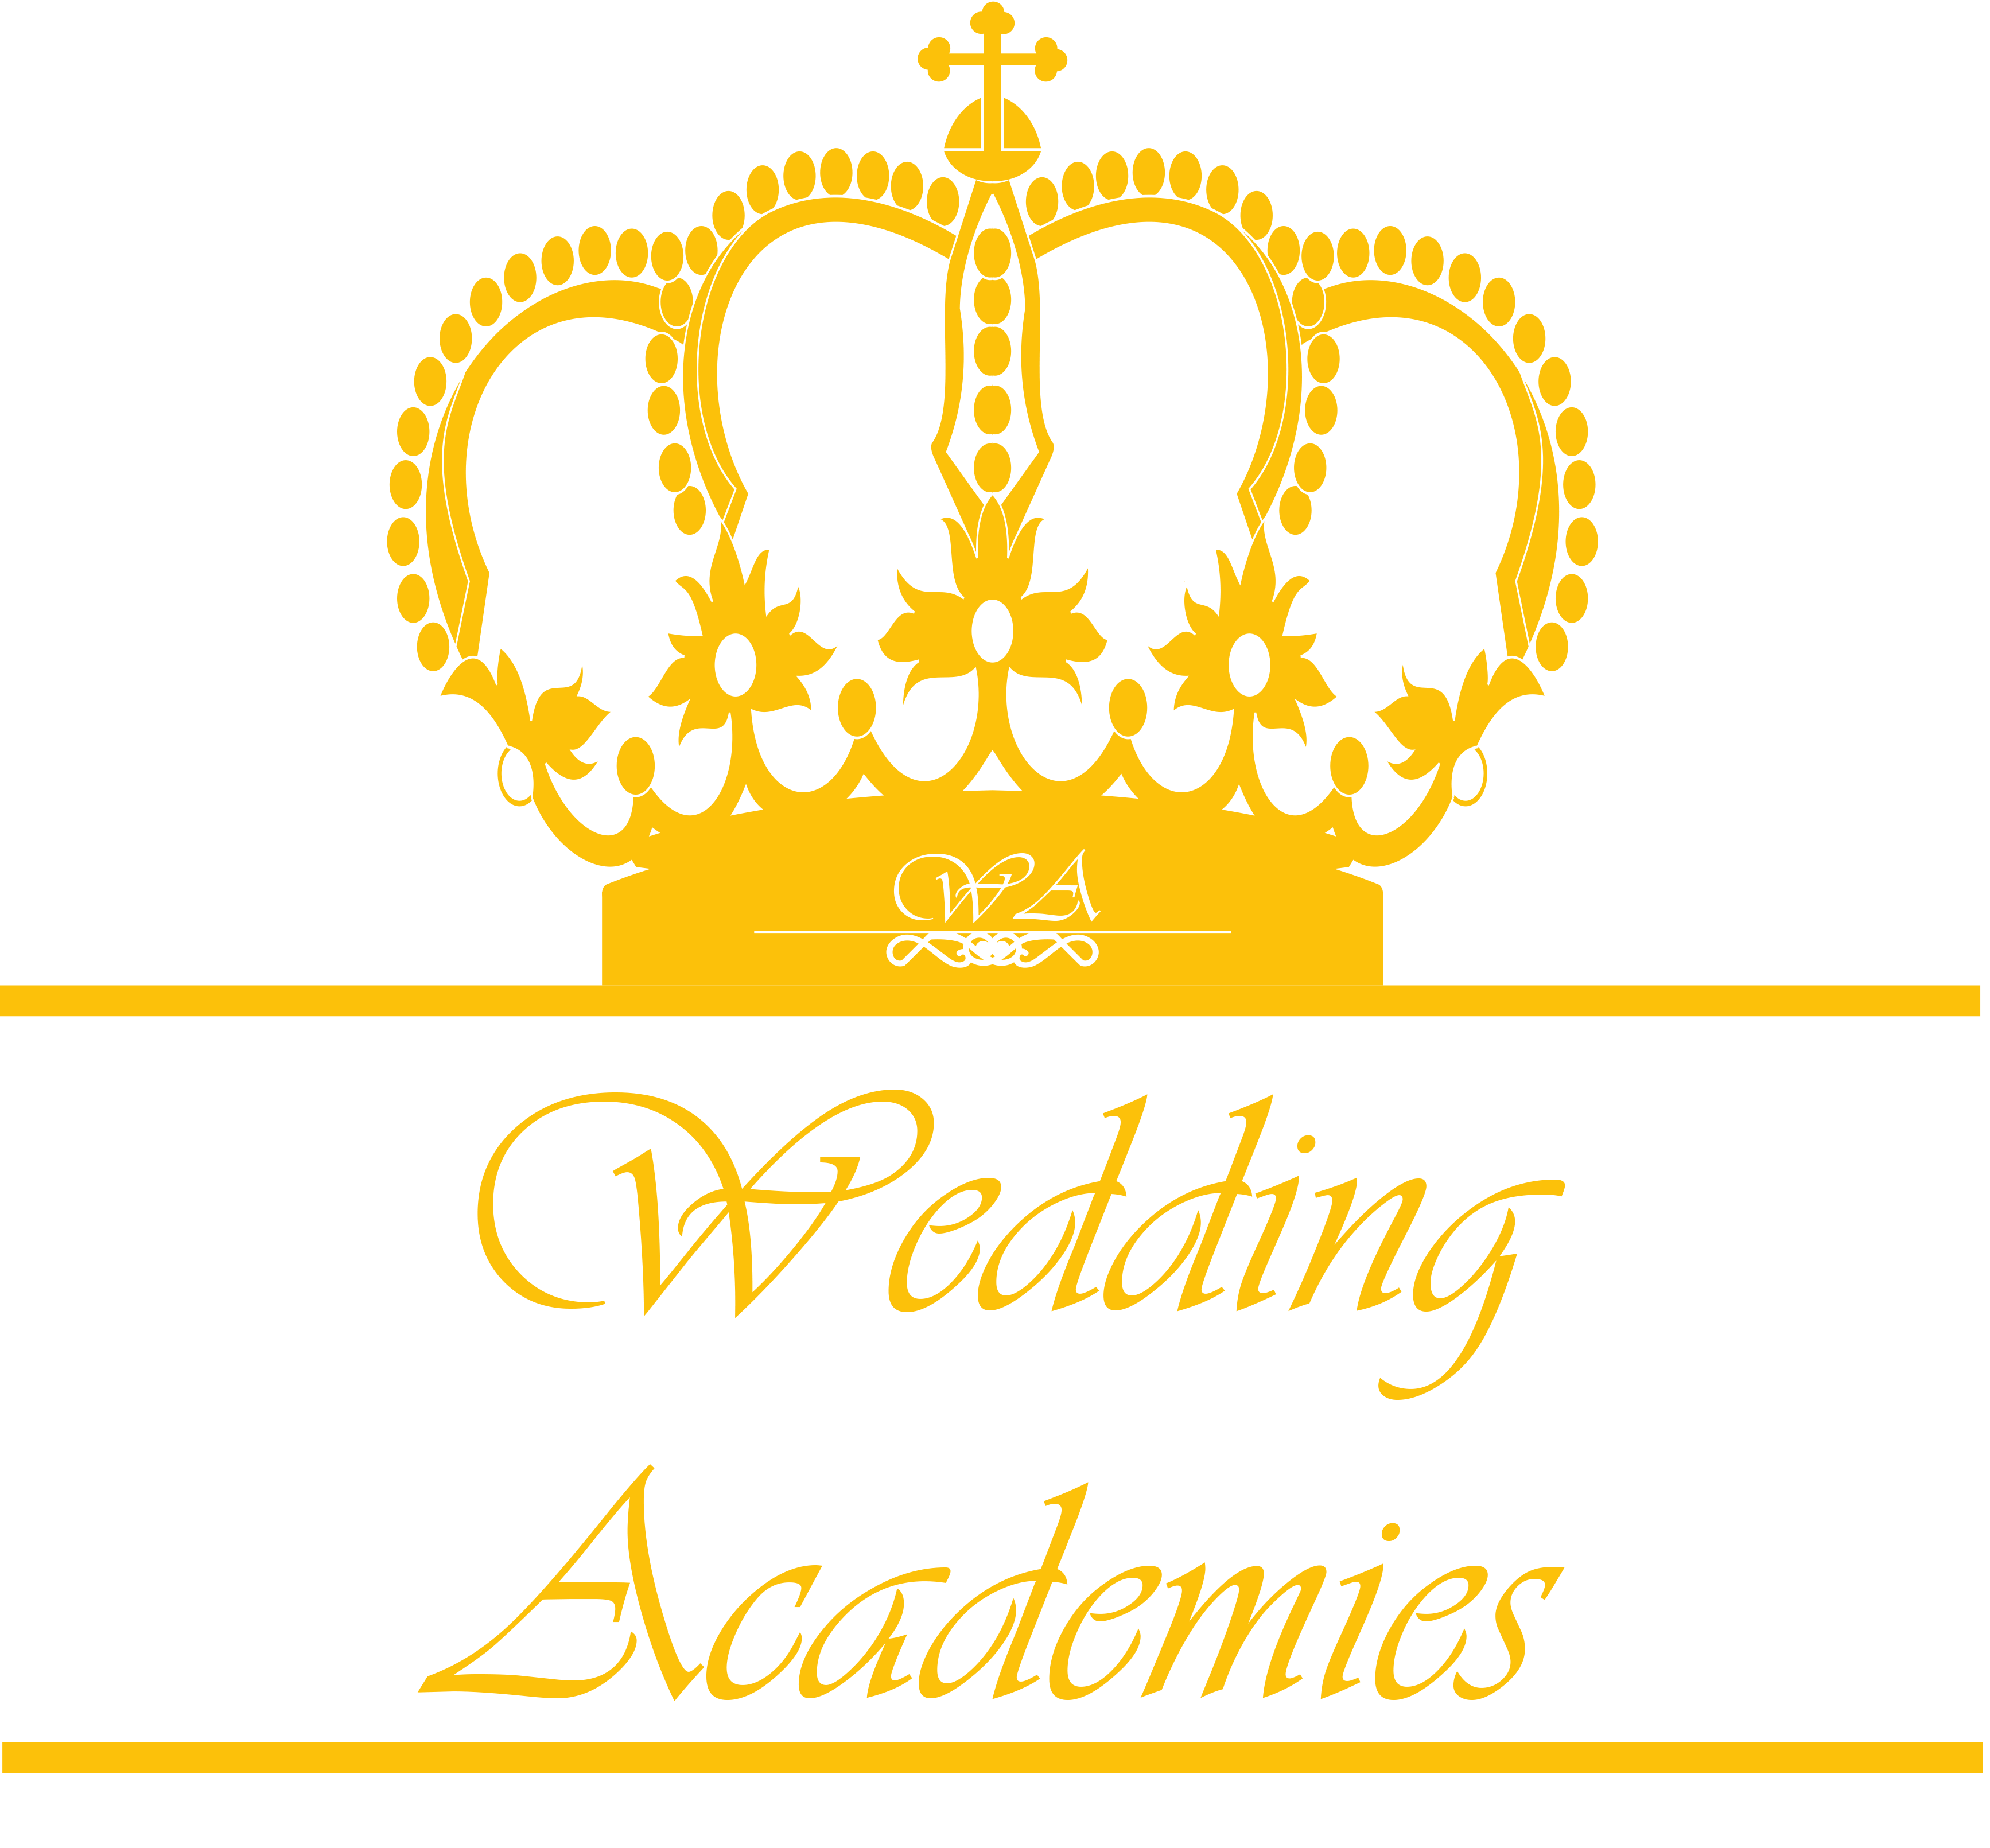 Wedding Academies